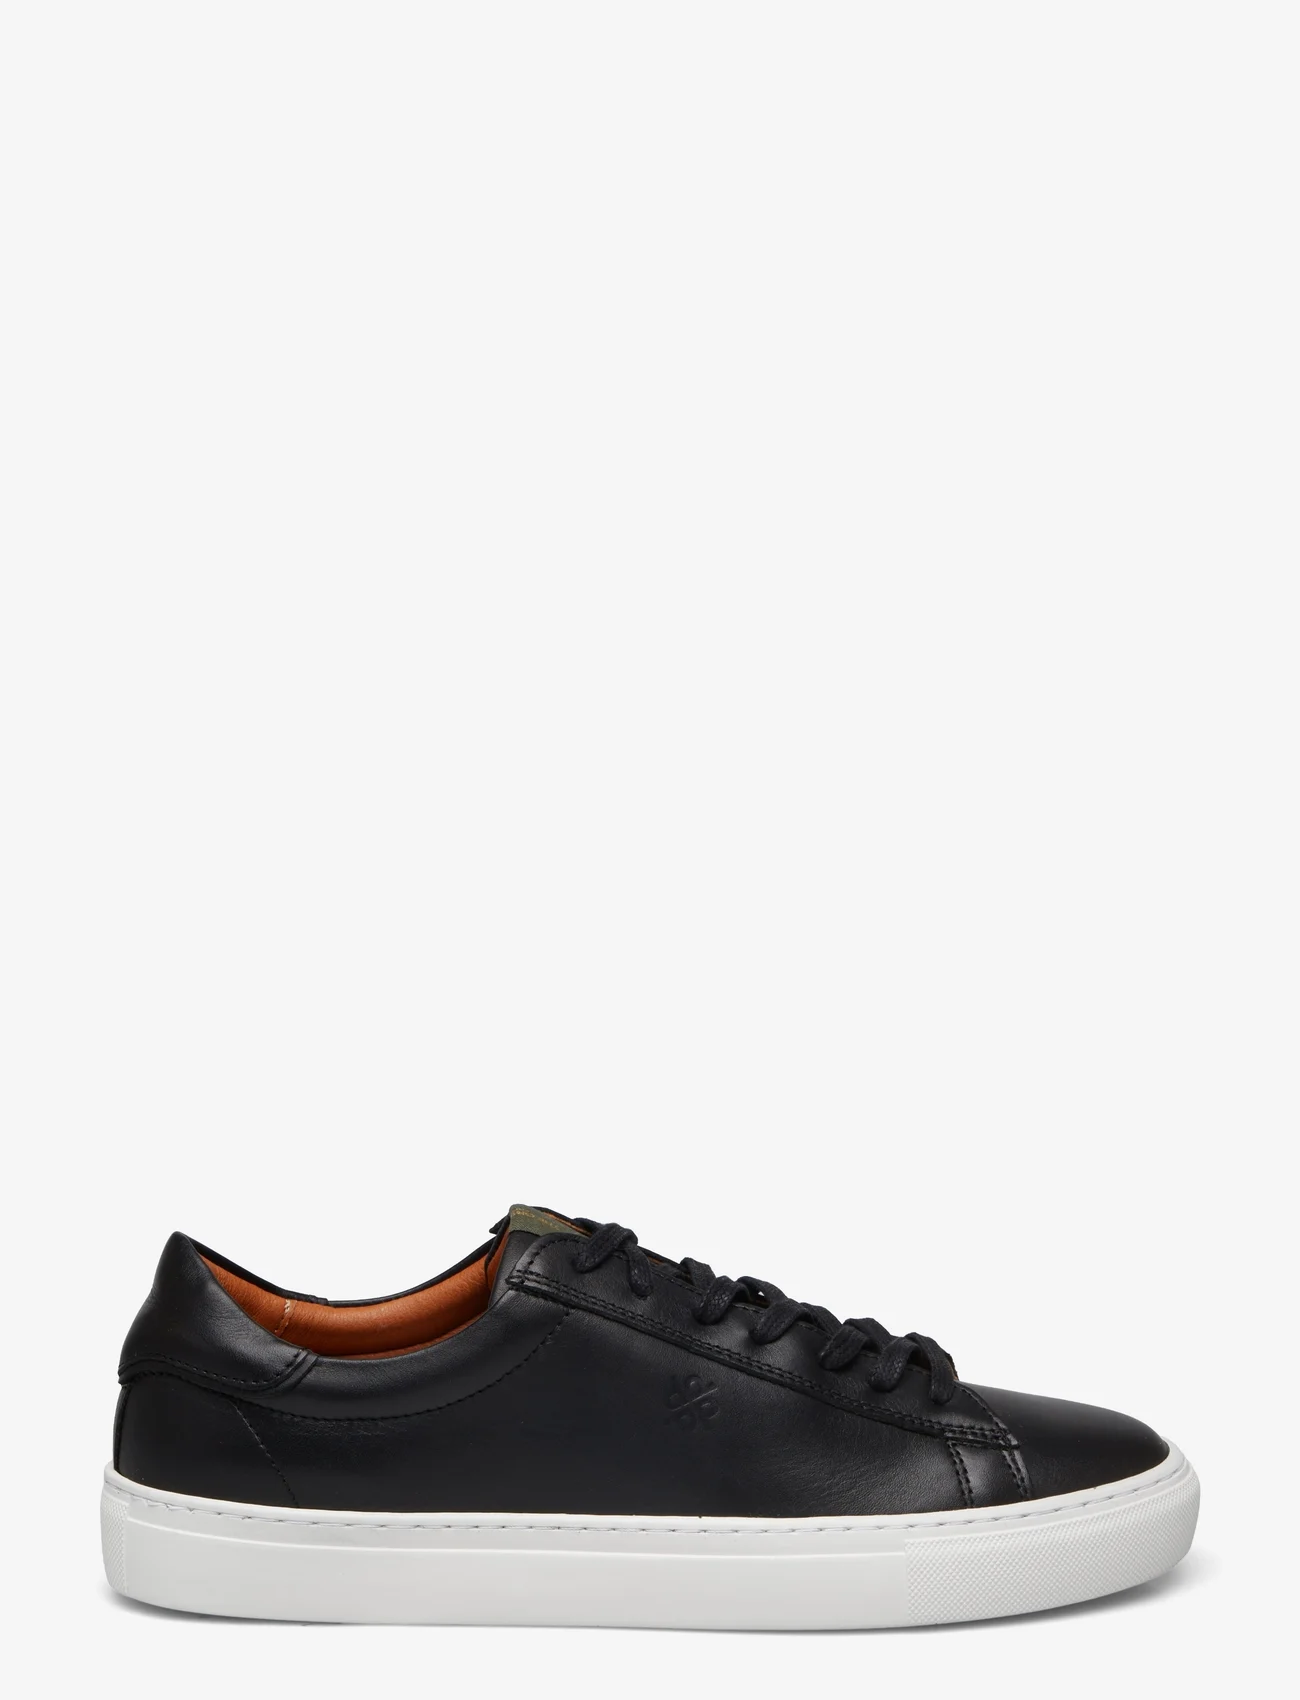 Playboy Footwear - Henri - låga sneakers - black leather - 1